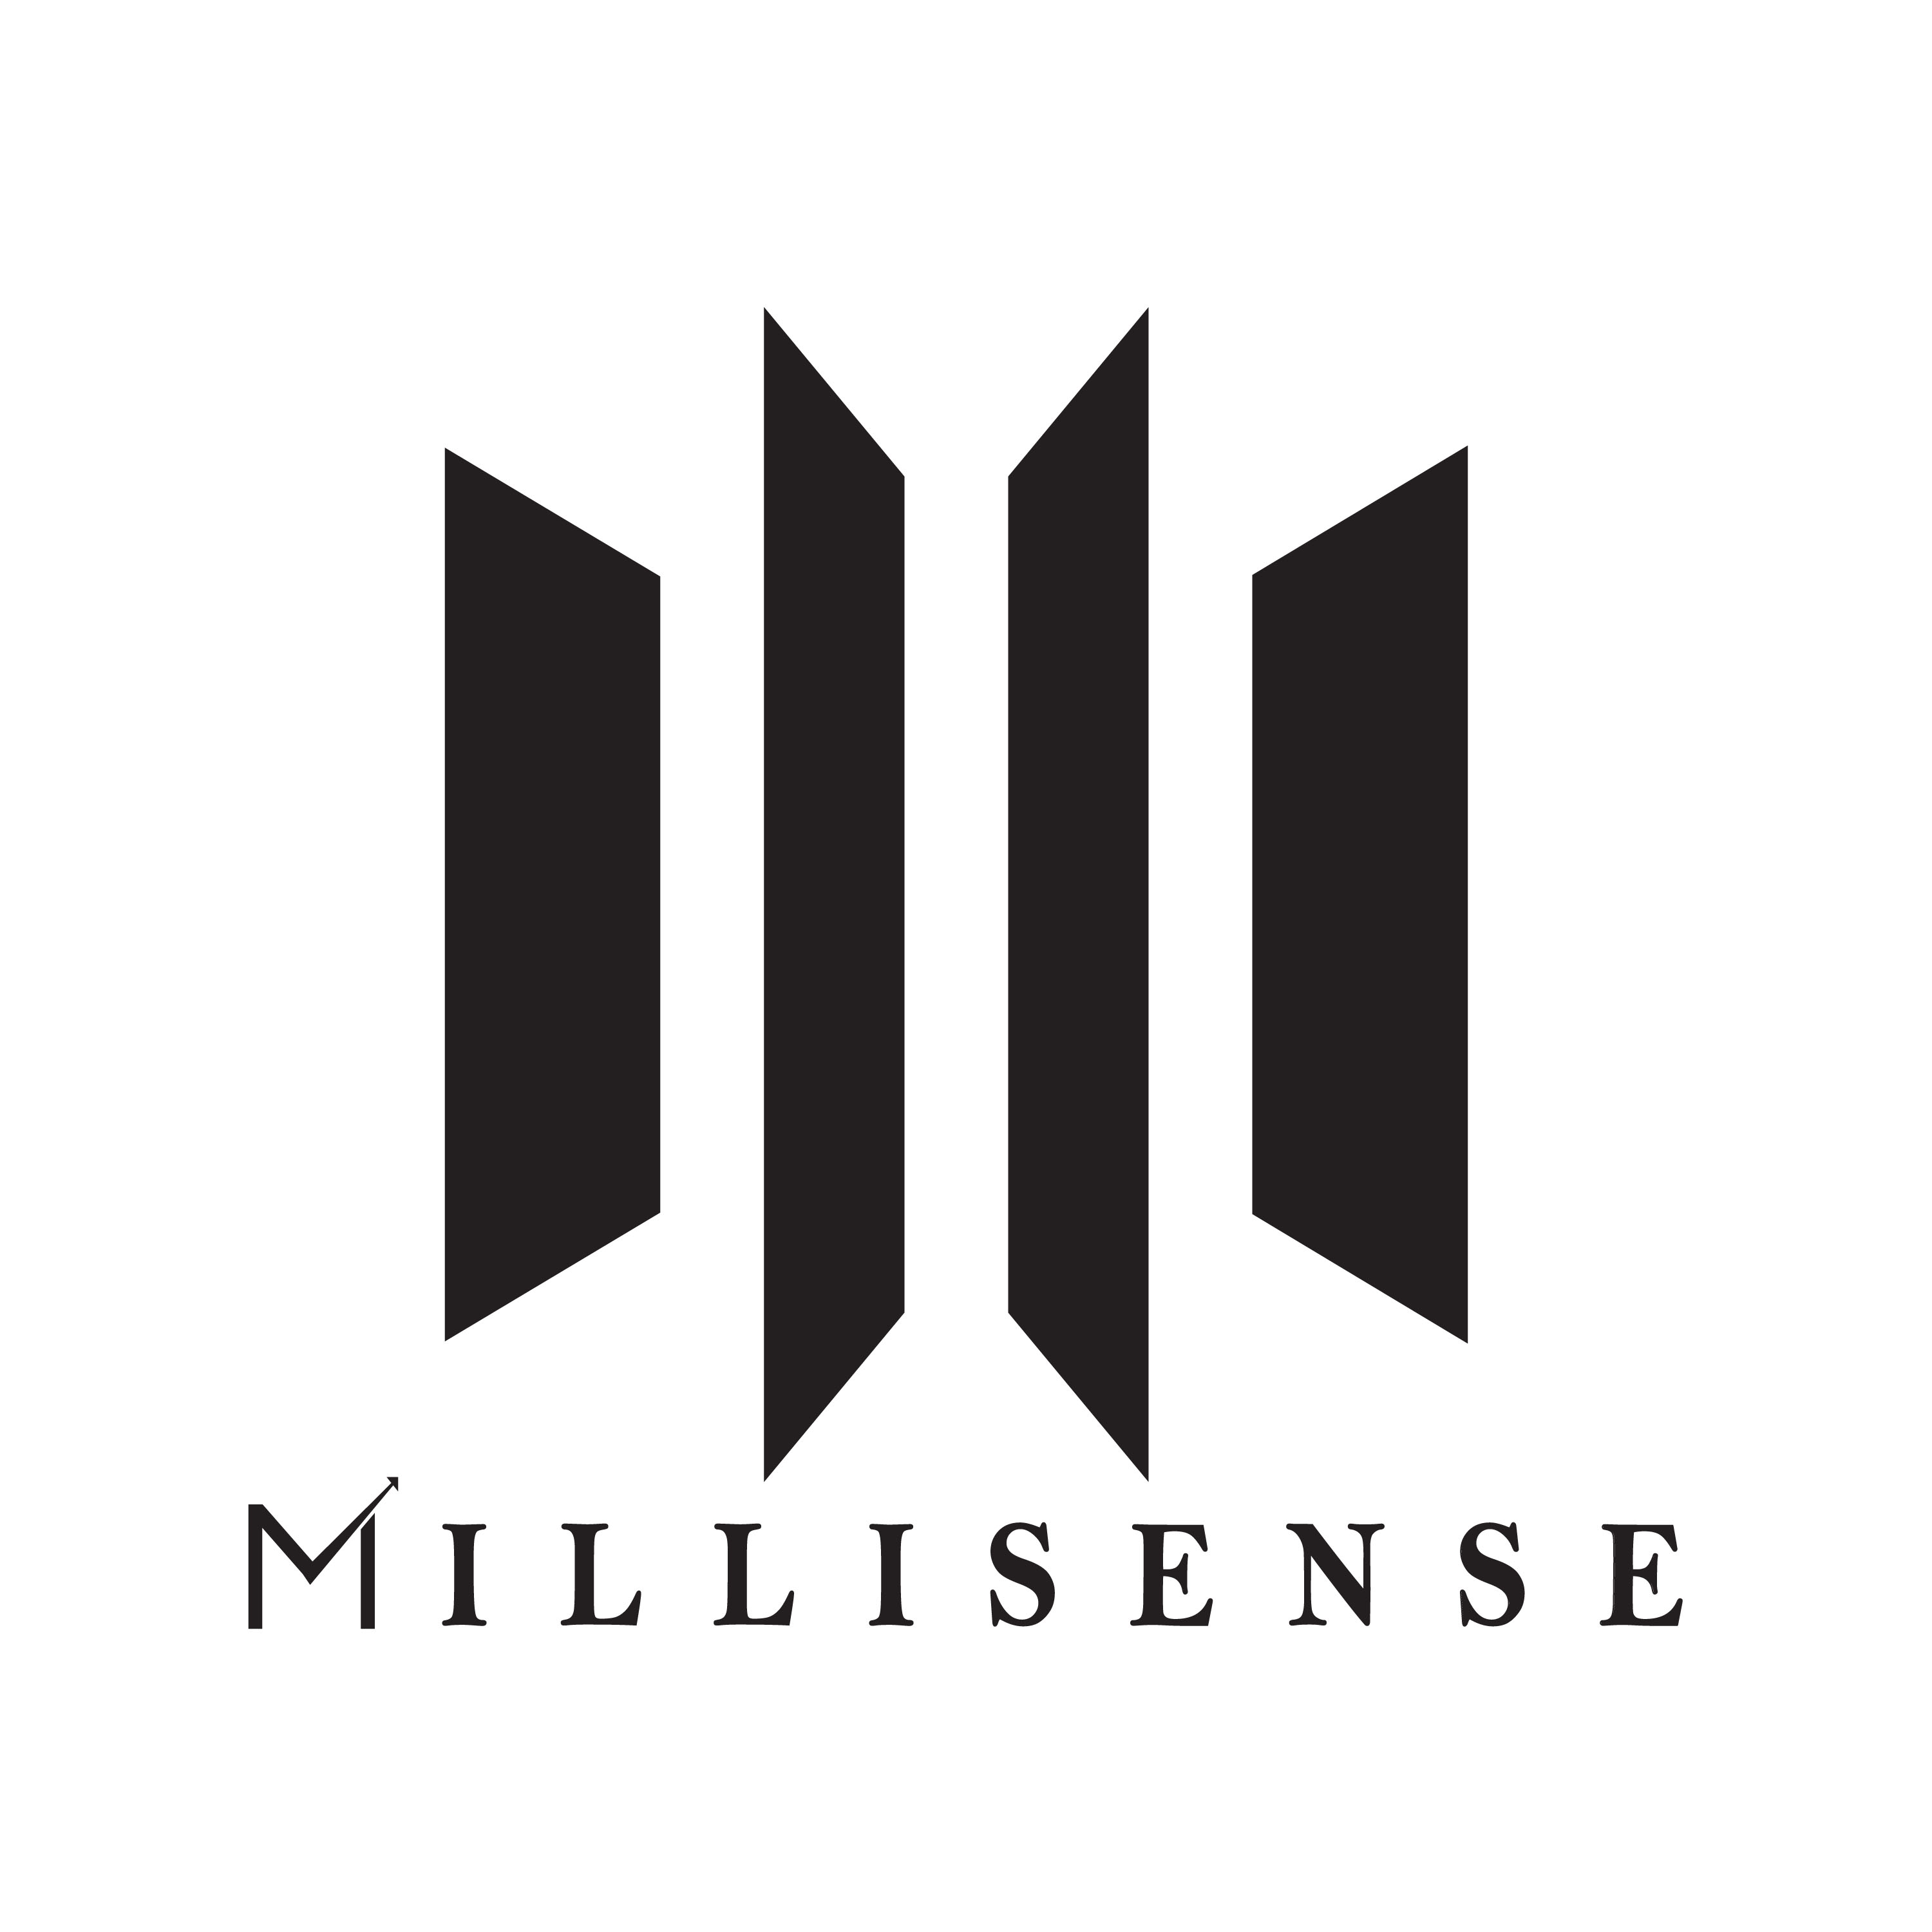 Millisense